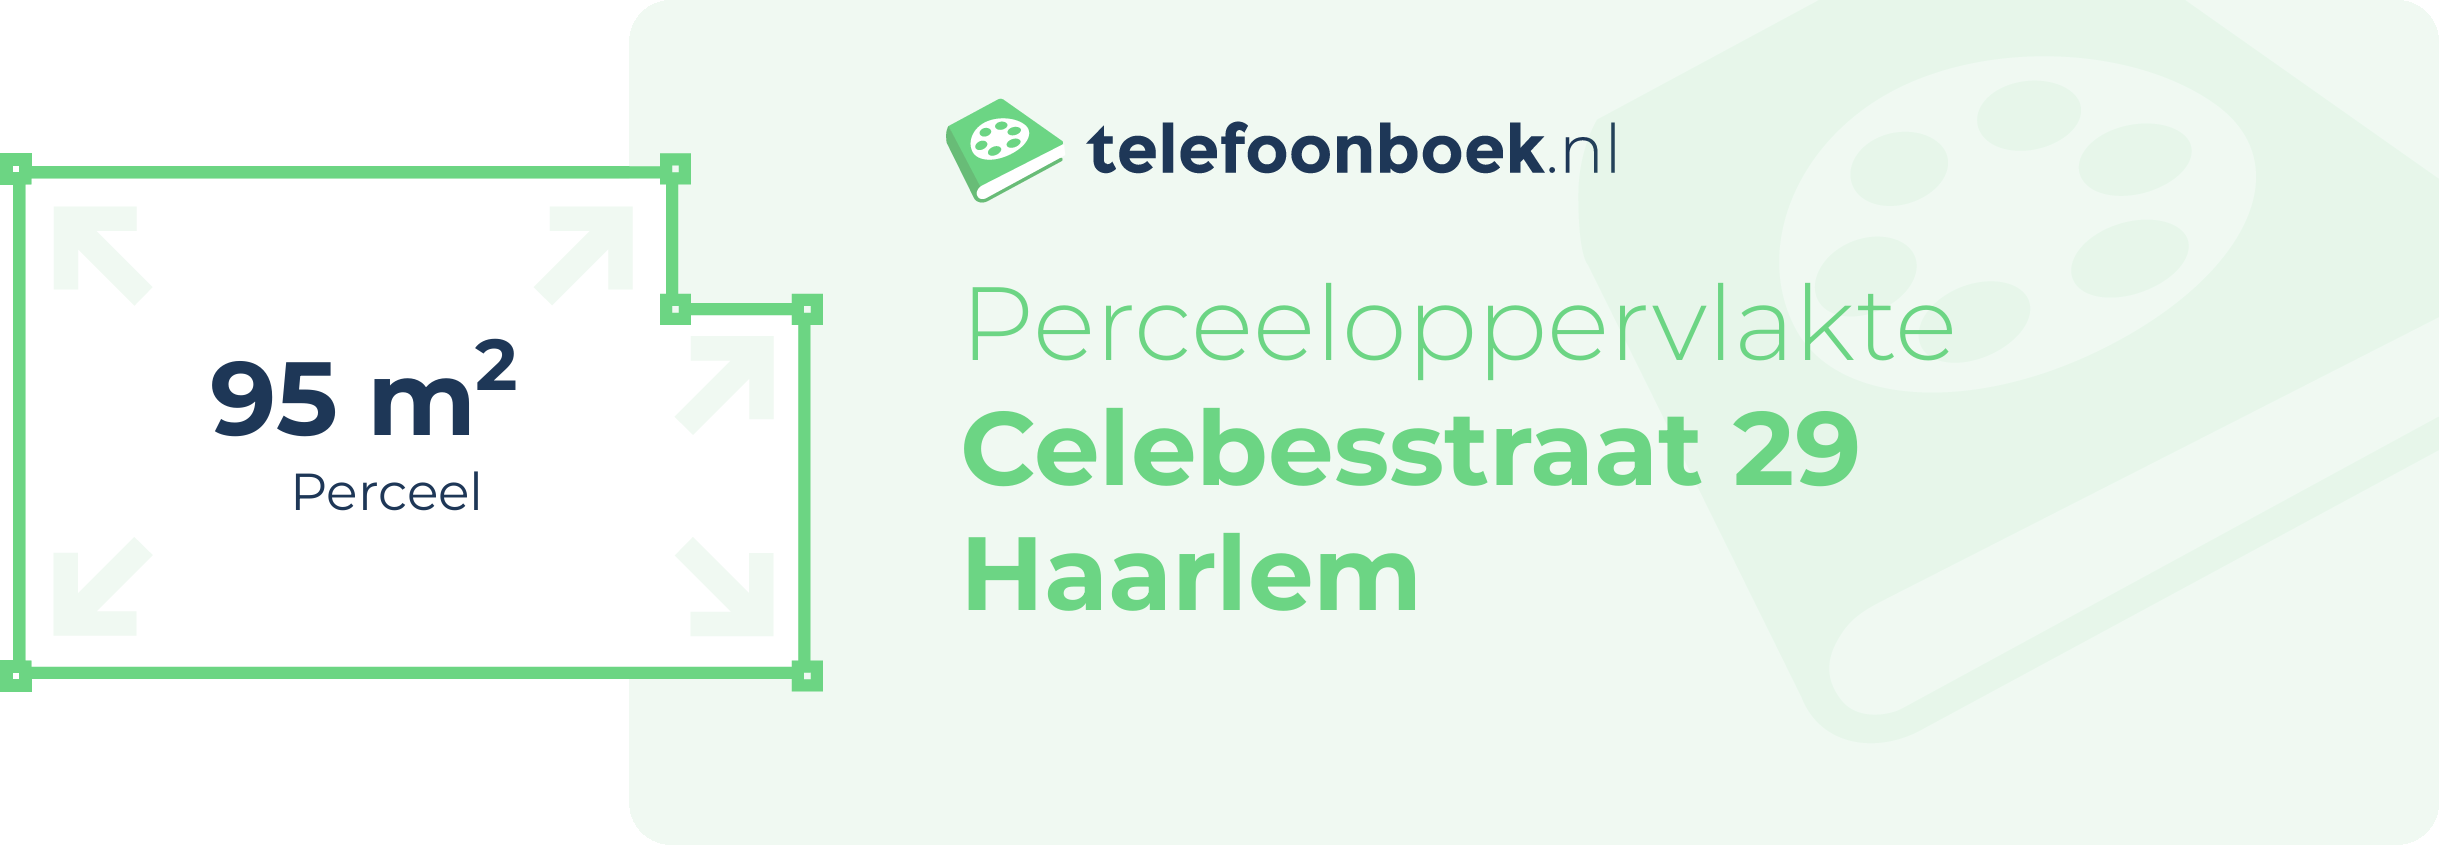 Perceeloppervlakte Celebesstraat 29 Haarlem